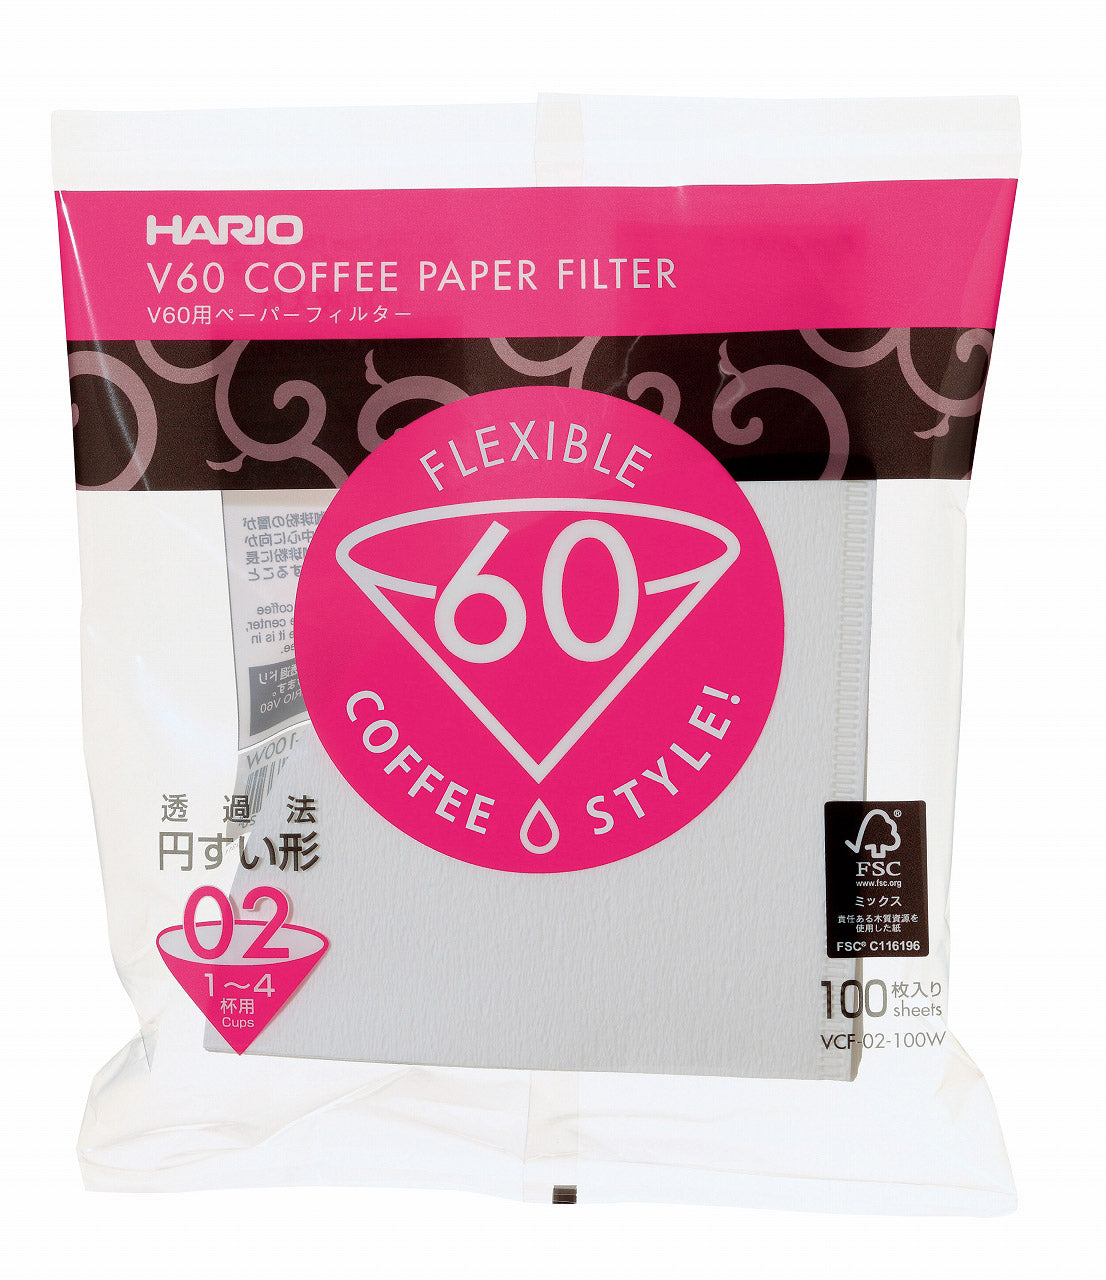 Hario v60 02 coffee paper filter